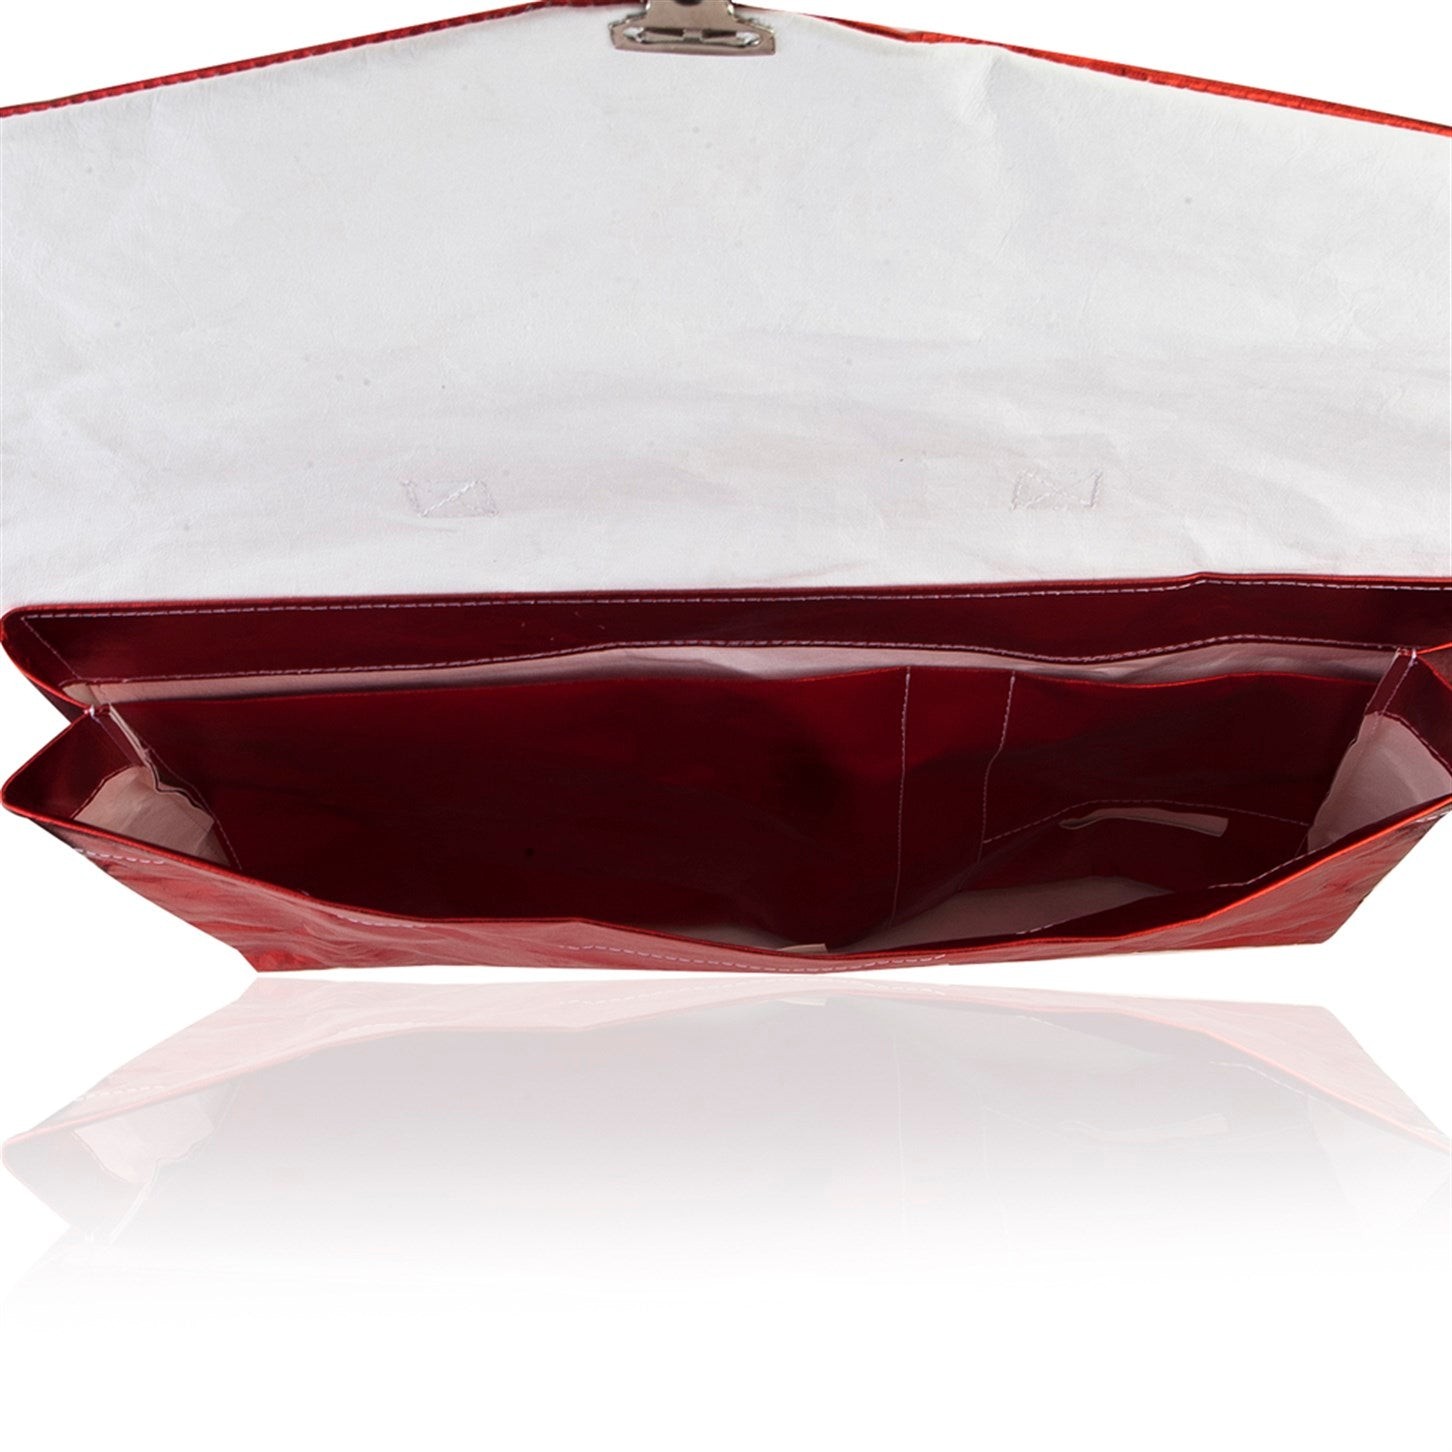 Epidotte Business Bag Red Shiny